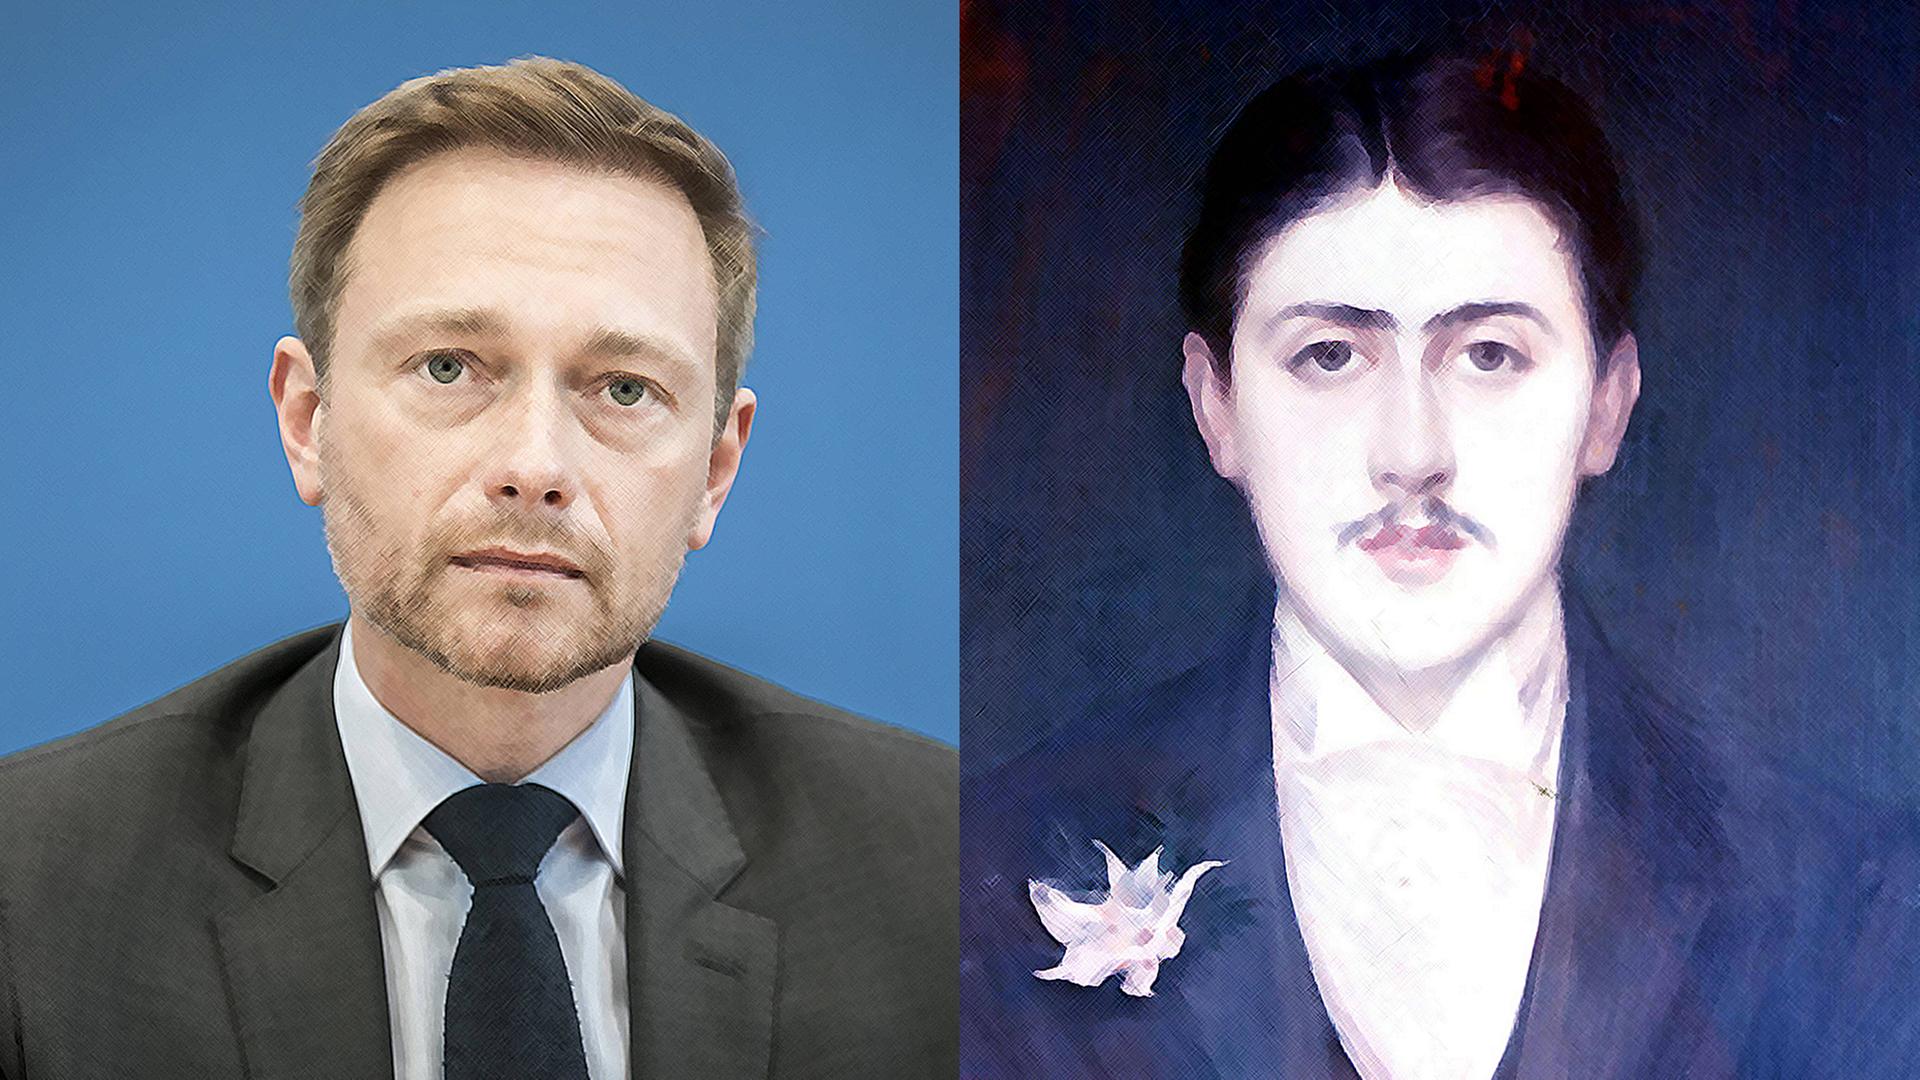 Links: Christian Lindner, FDP-Chef. Rechts: Marcel Proust, Schriftsteller.